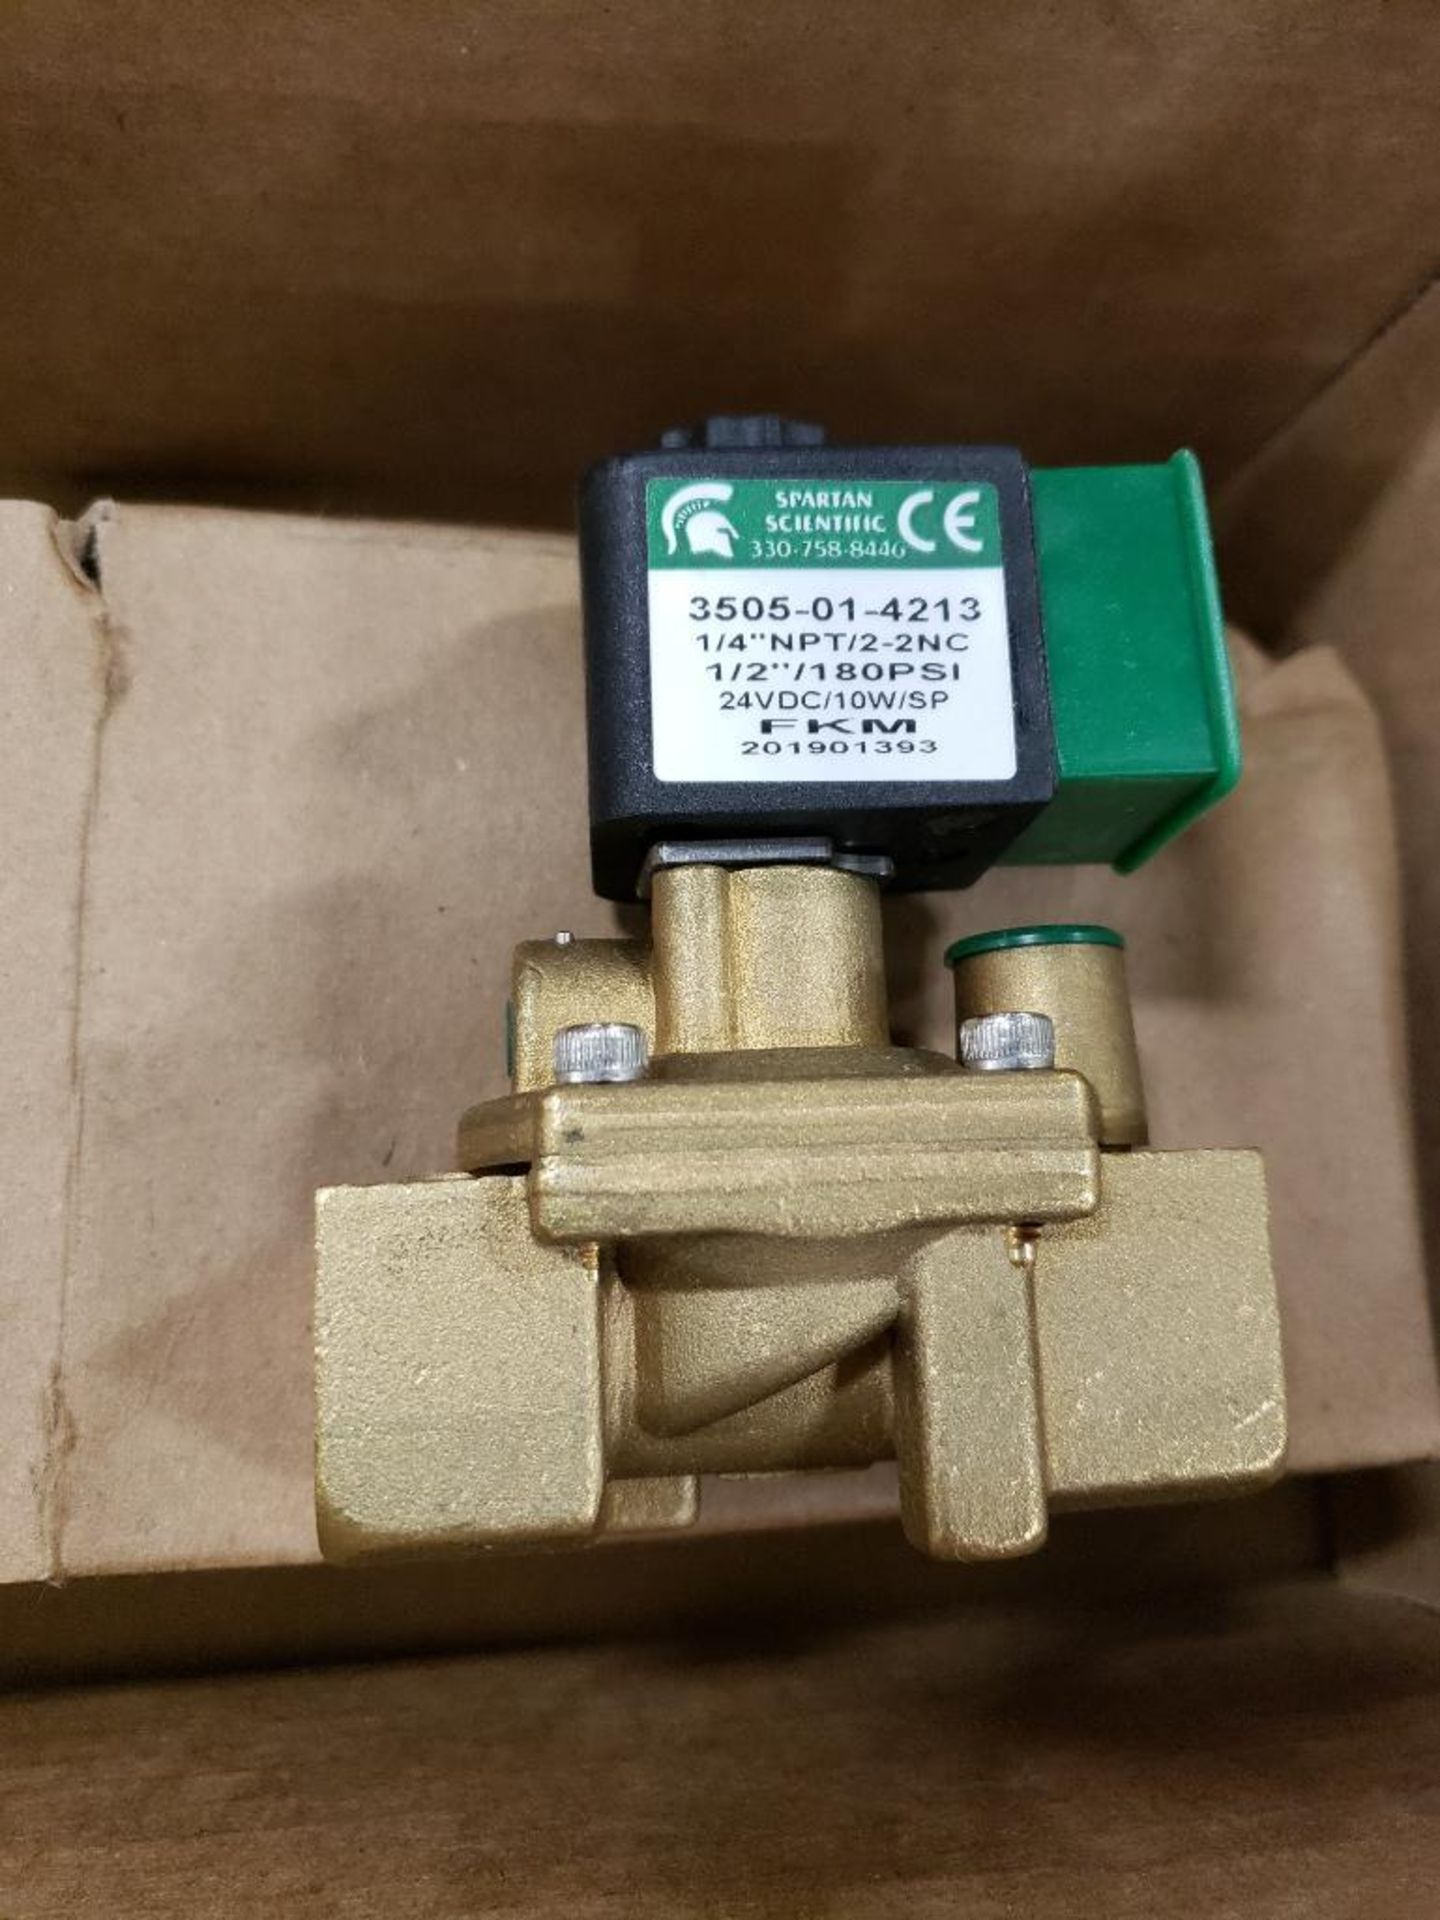 Spartan Scientific valve. Part number 3505-01-4213. New in box.